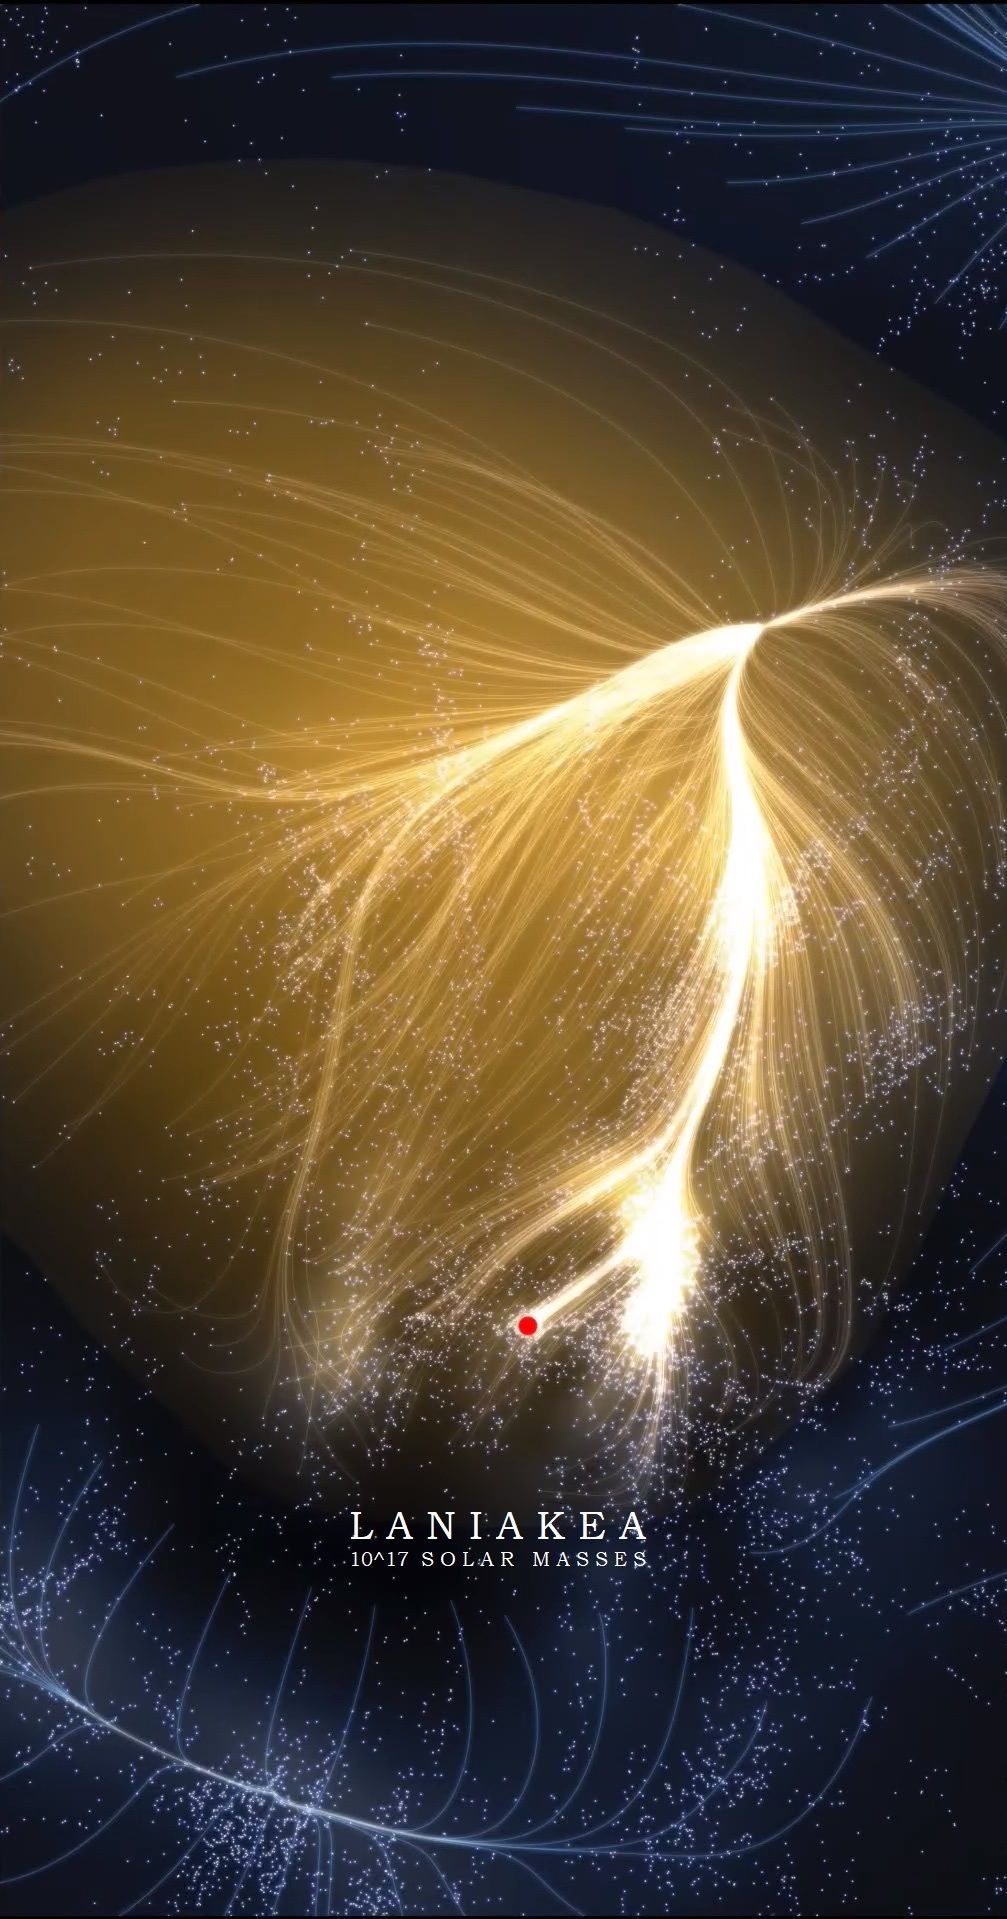 Laniakea cover. Galaxy wallpaper, Cosmos, 4 states of matter